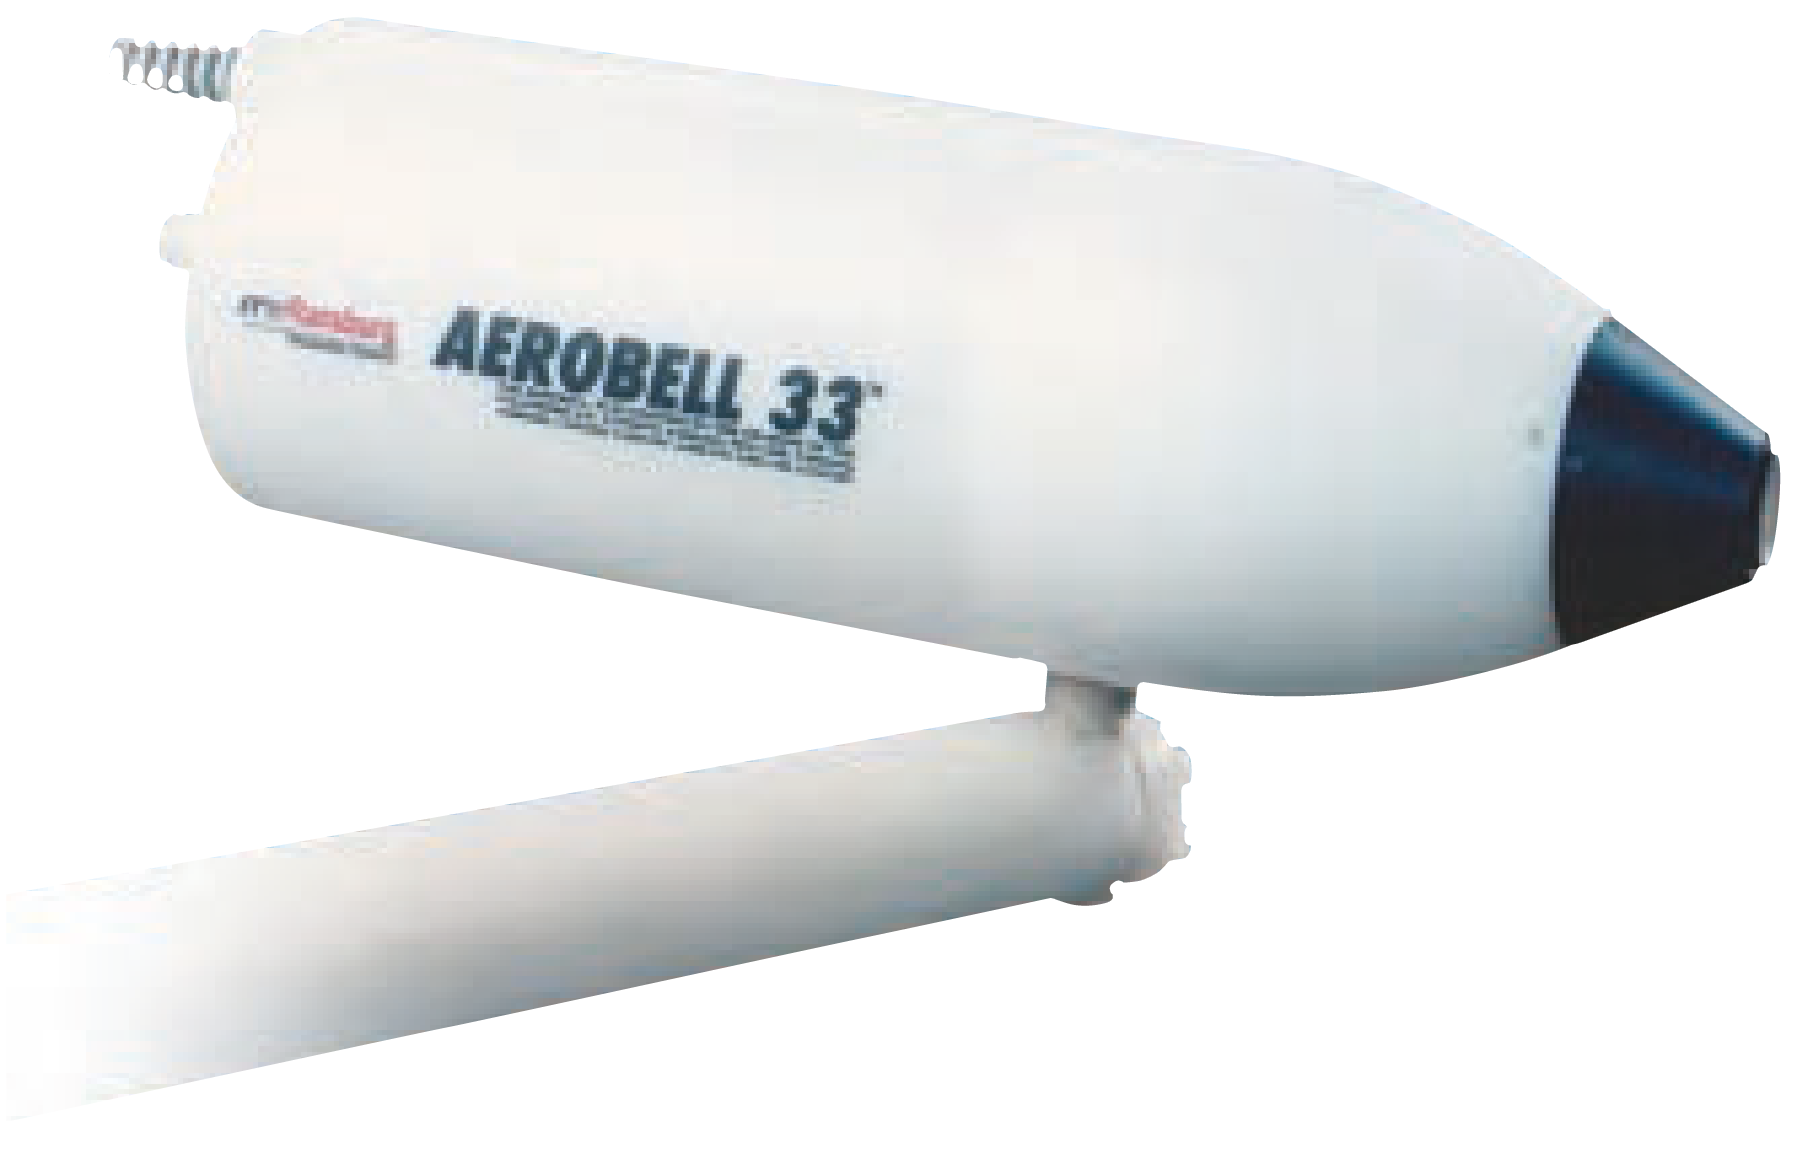 aerobell-33-ransburg